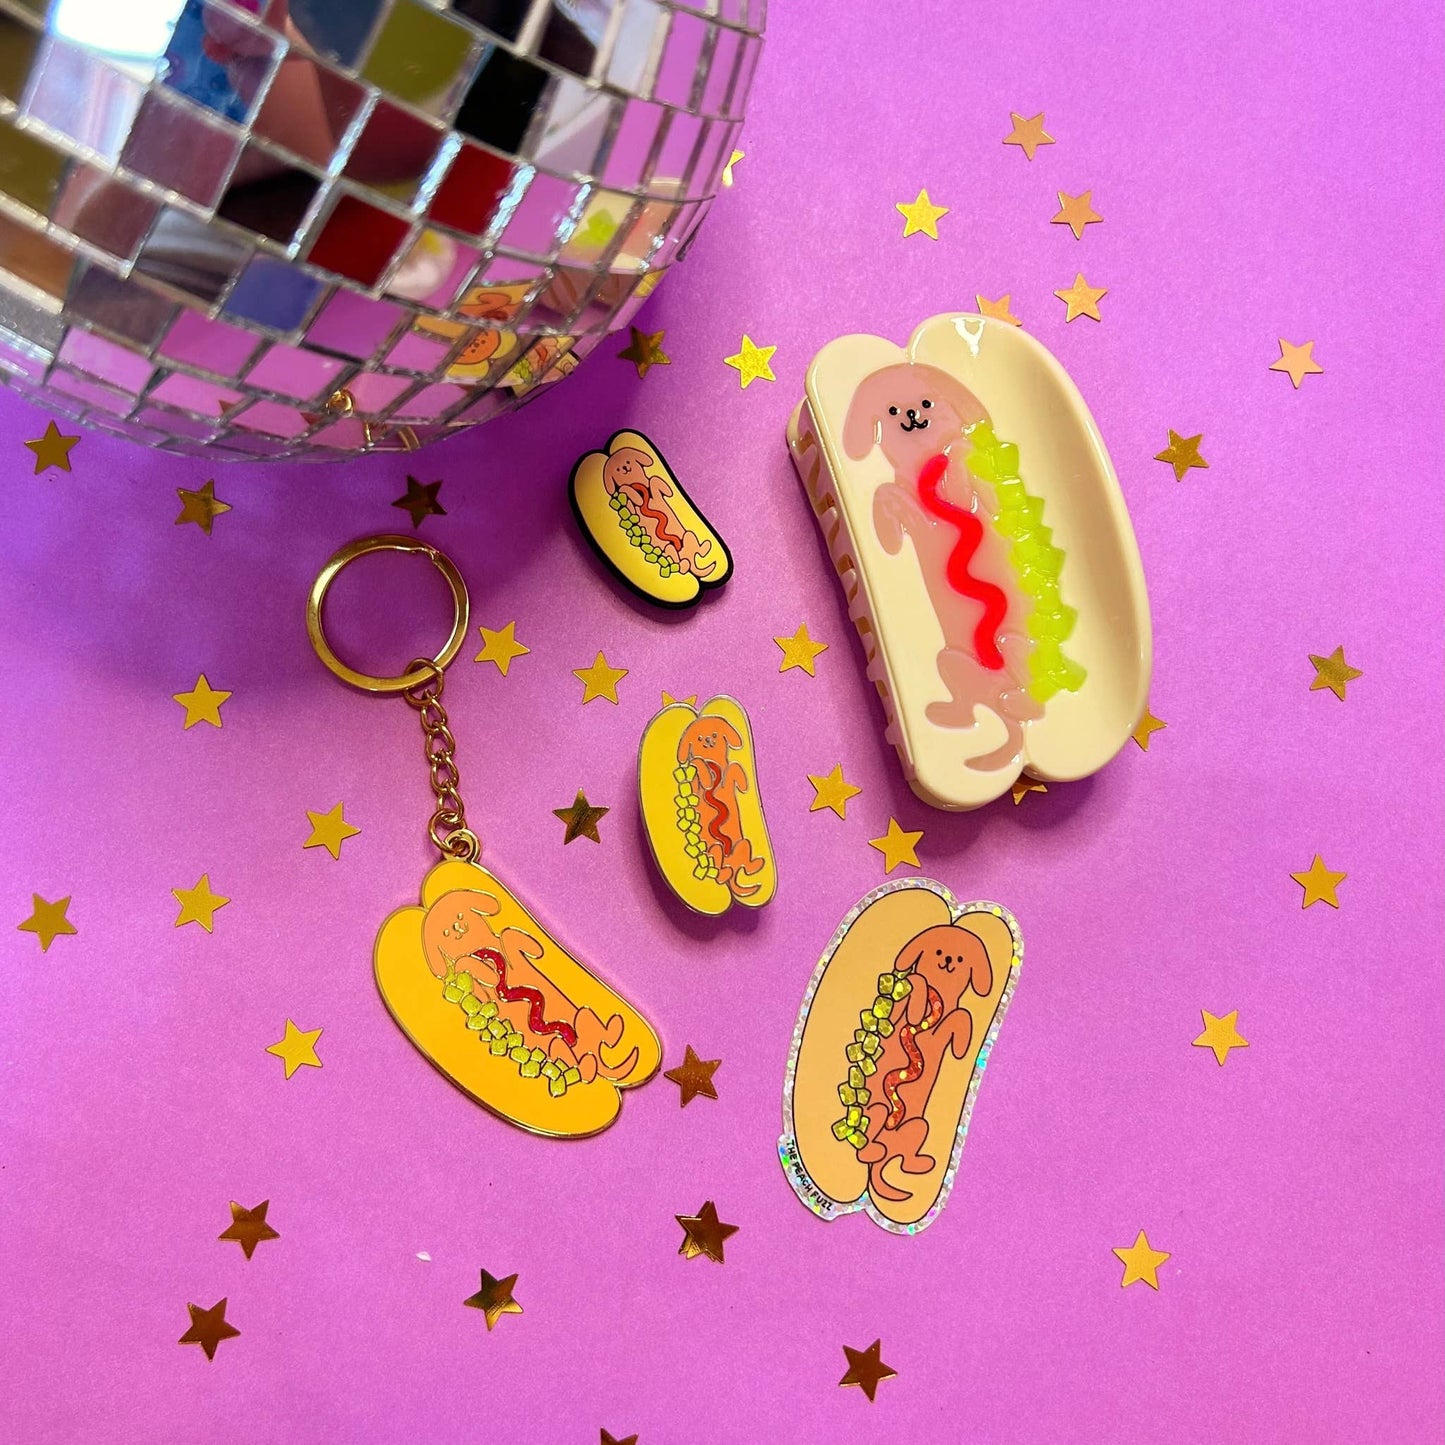 The Peach Fuzz - Hot Doggy Dog Enamel Pin: Pin